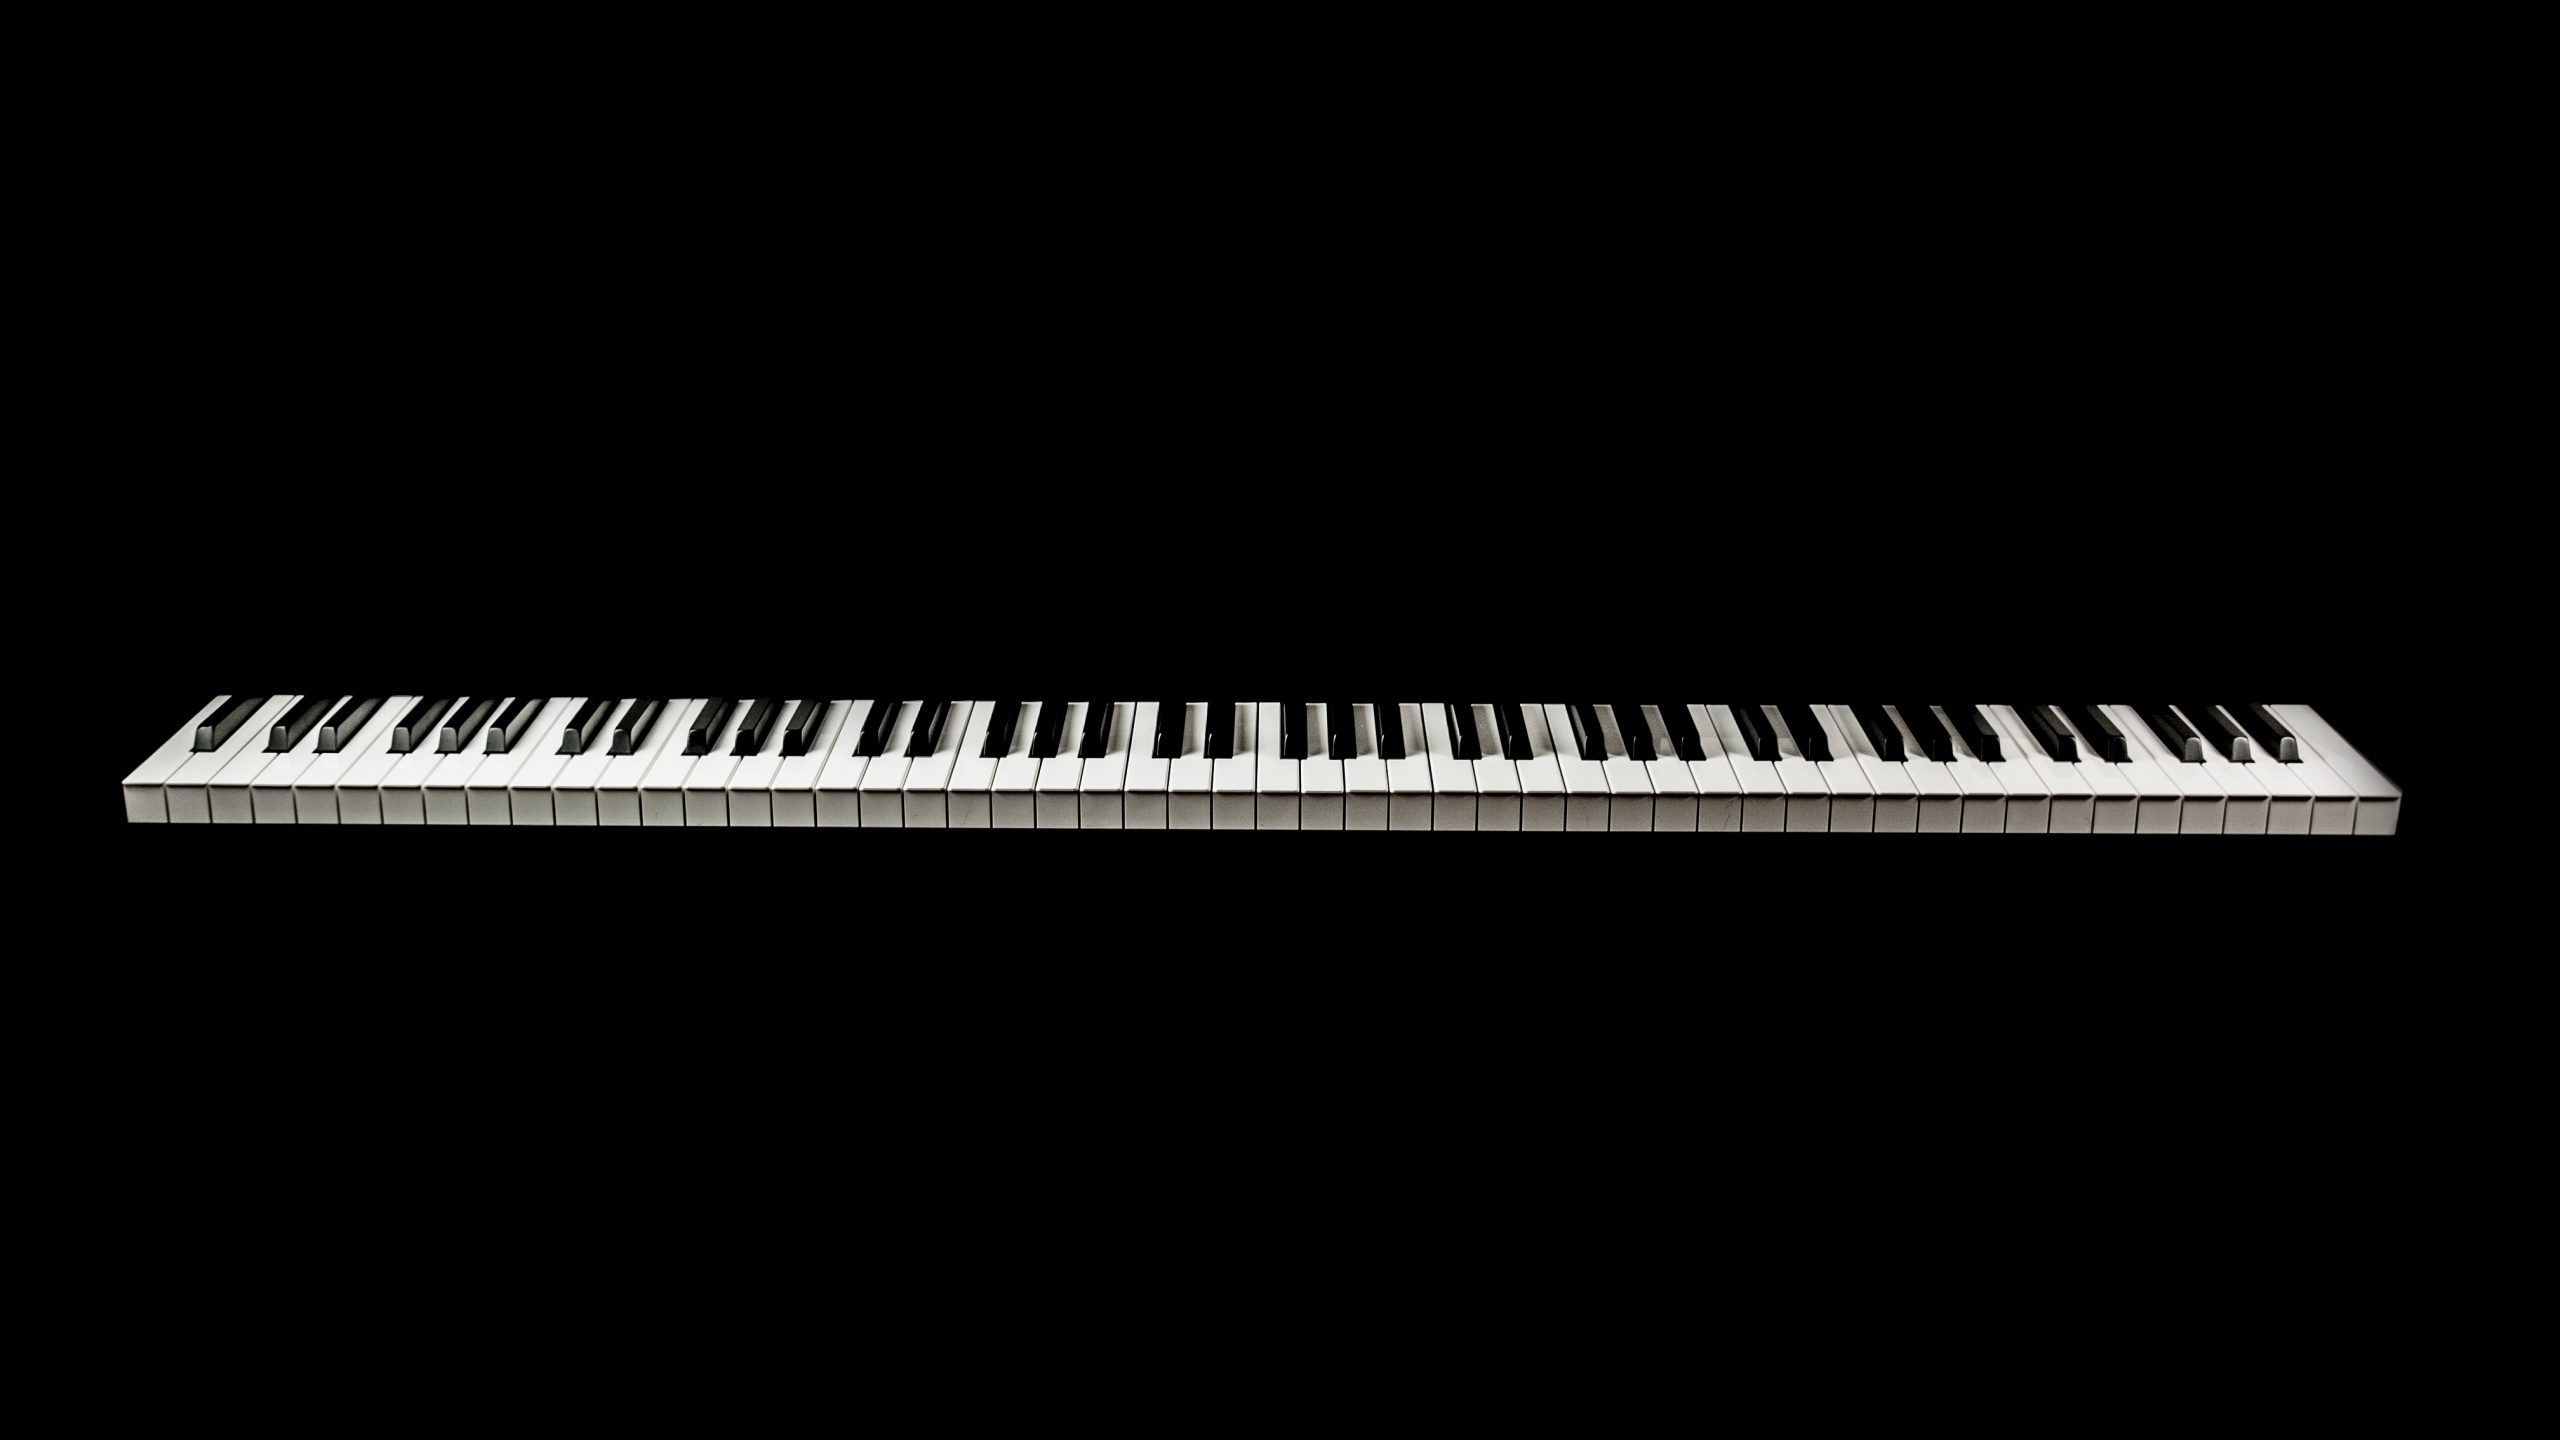 Clavier Musical, Piano Numérique, Piano Électrique, Piano, Clavier. Wallpaper in 2560x1440 Resolution